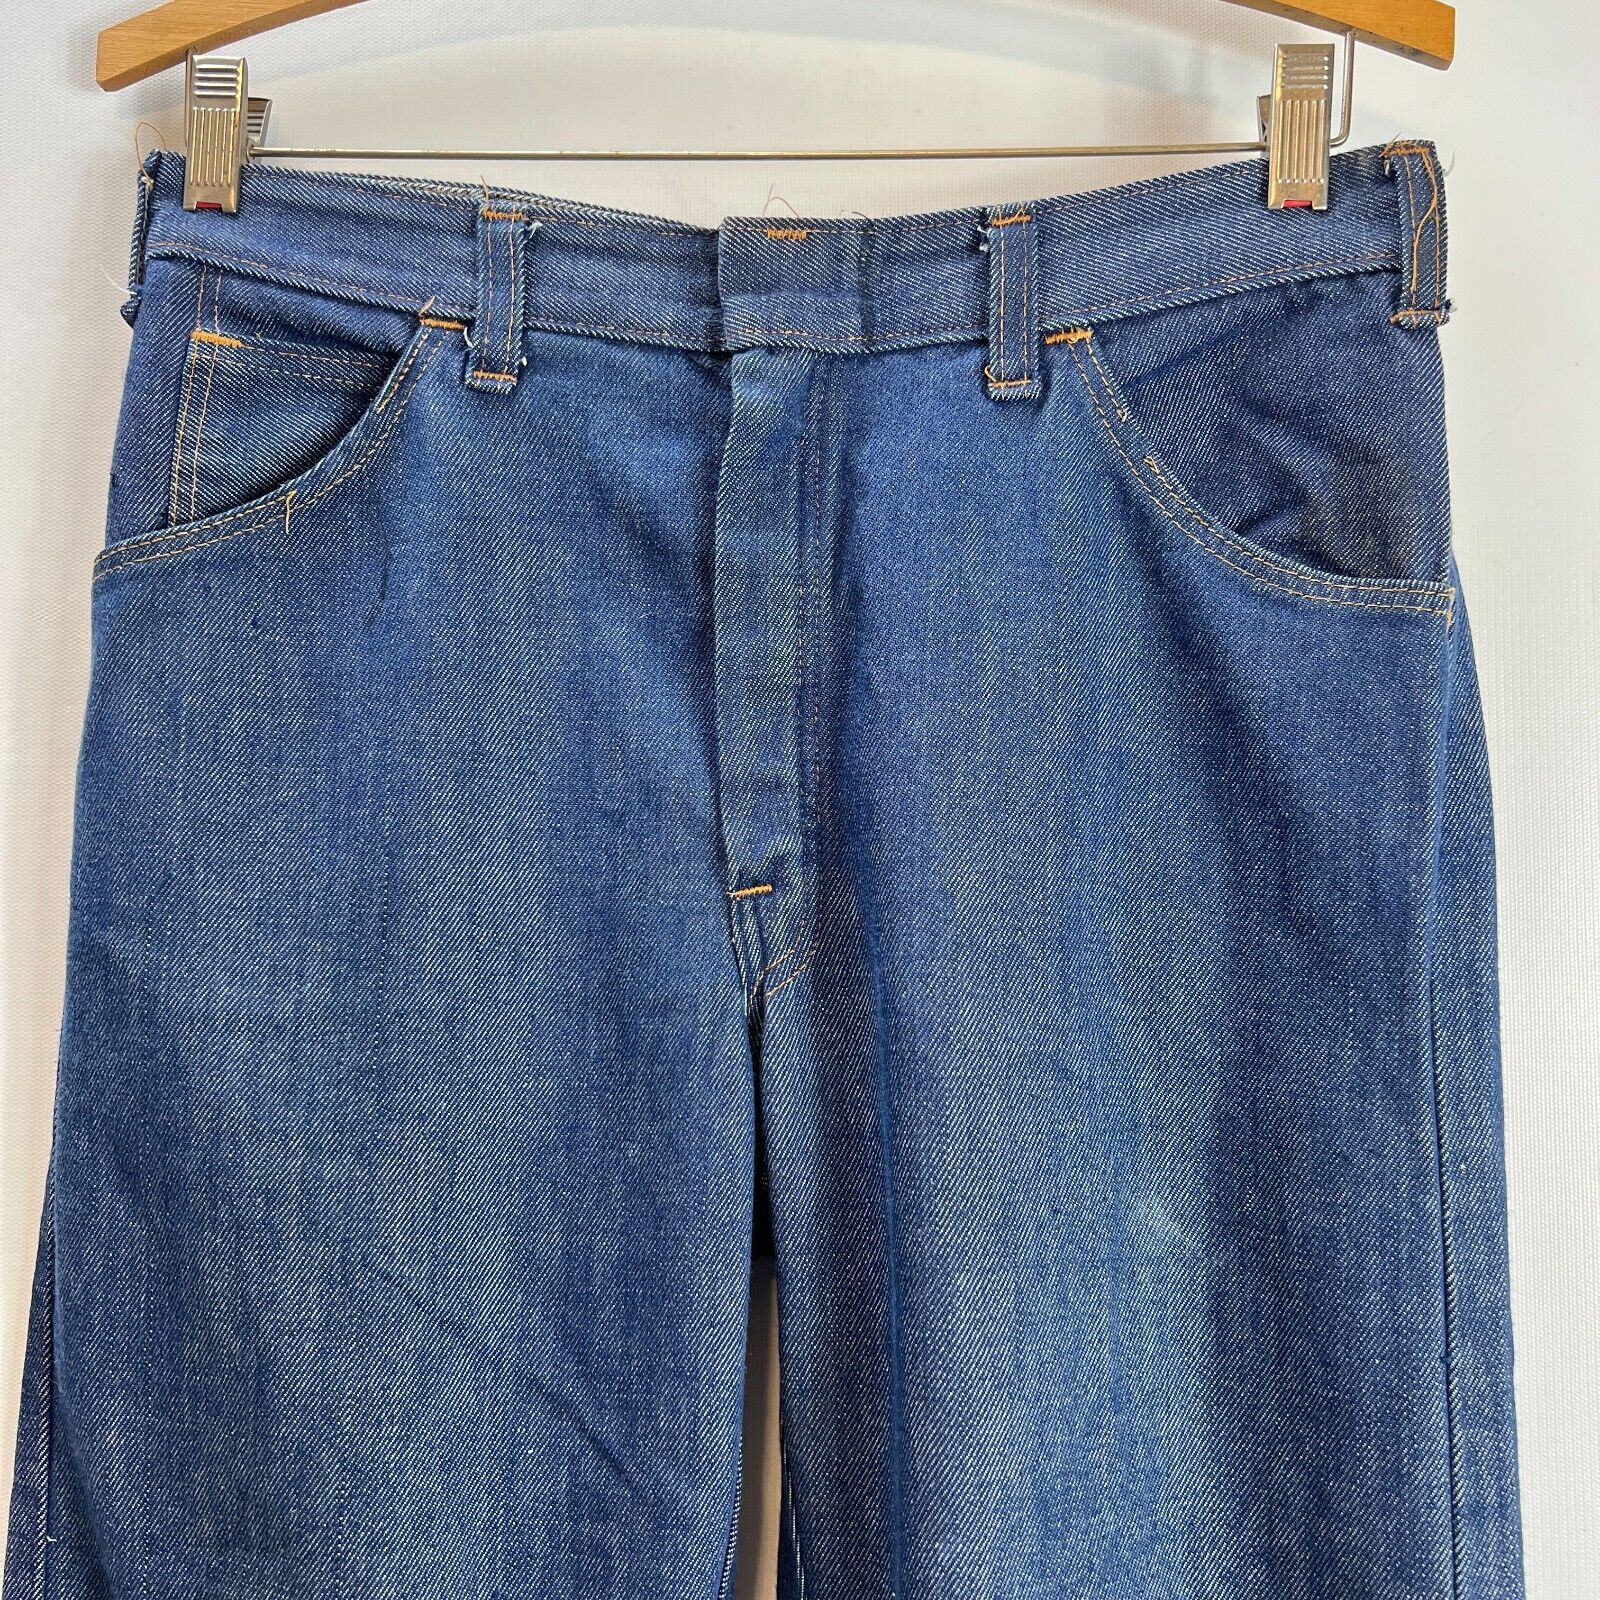 Vintage 50s 60s Dickies Denim Jeans Mens 28x30 Rare Find Slide Clasp